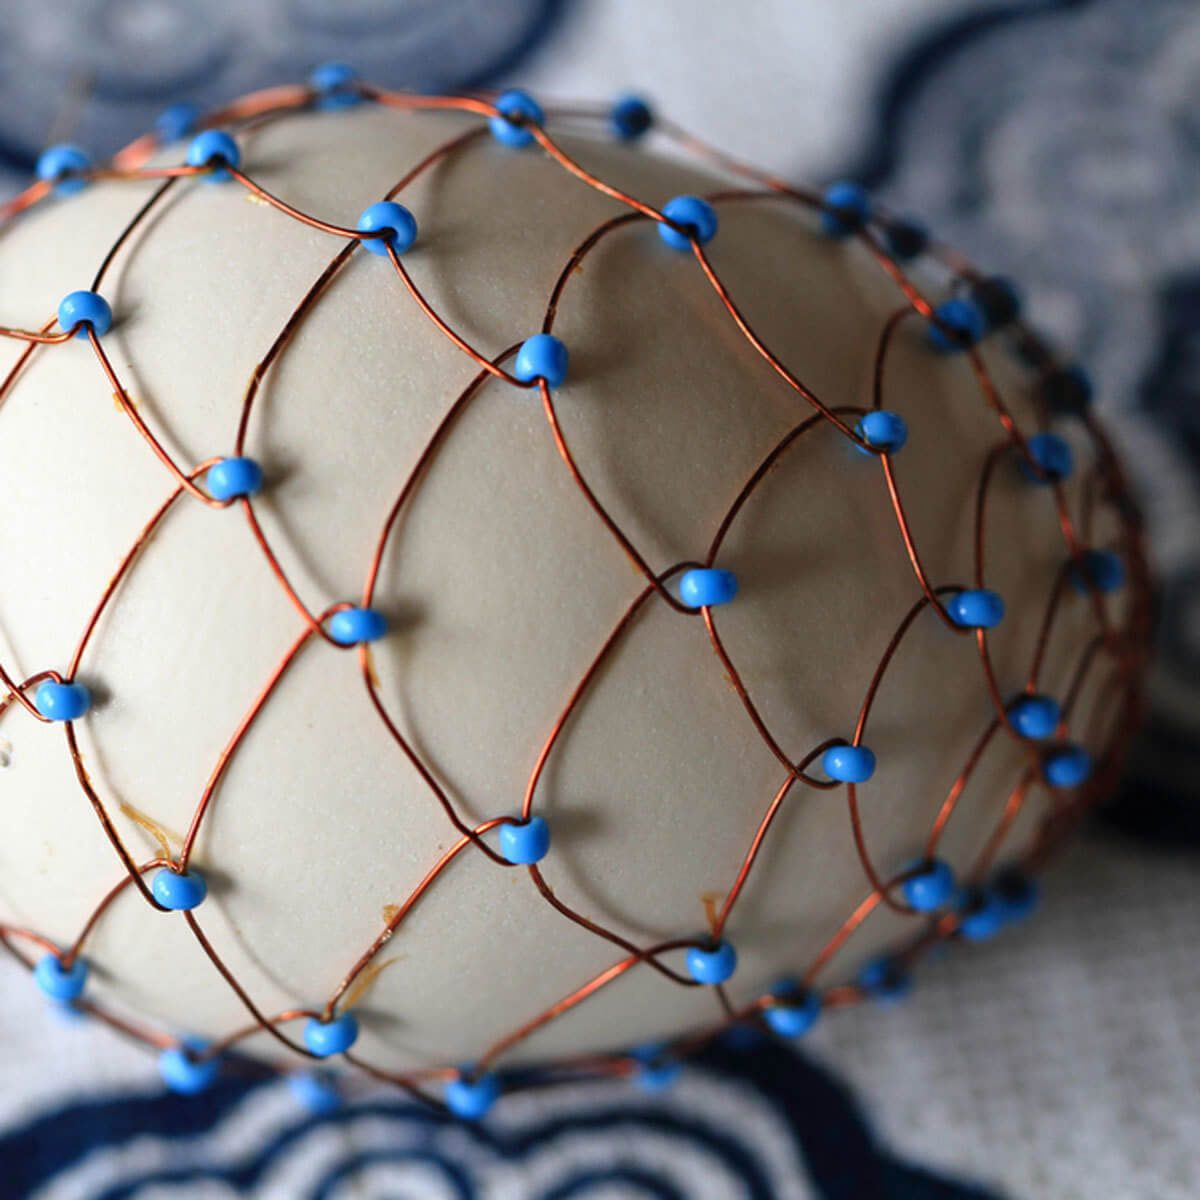 Craft Wire - Copper wire